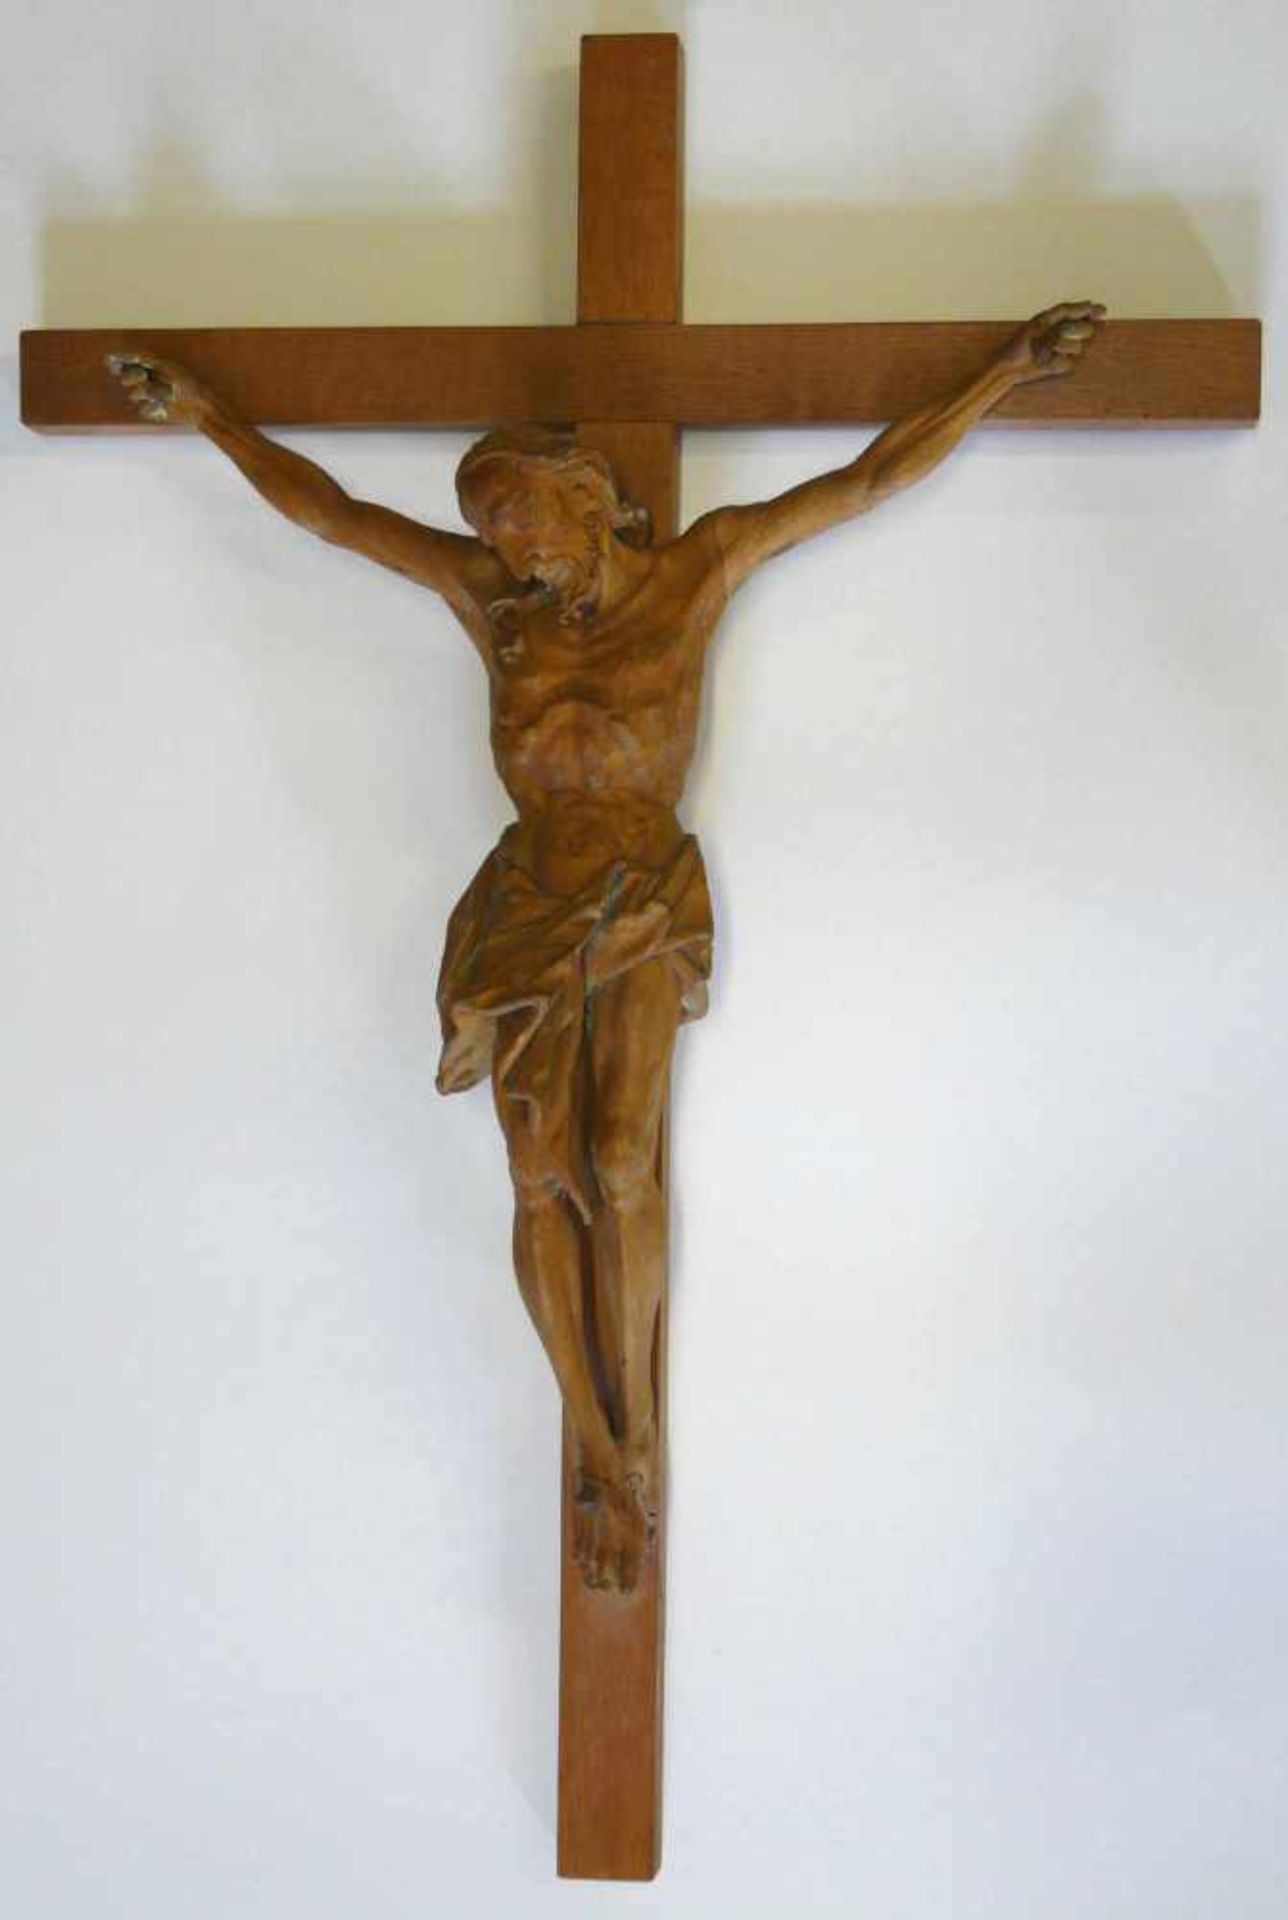 Kruzifix Christus-Corpus, Holz, geschnitzt, wohl 19. Jahrhundert, Kreuz ergänzt. Das ehemals